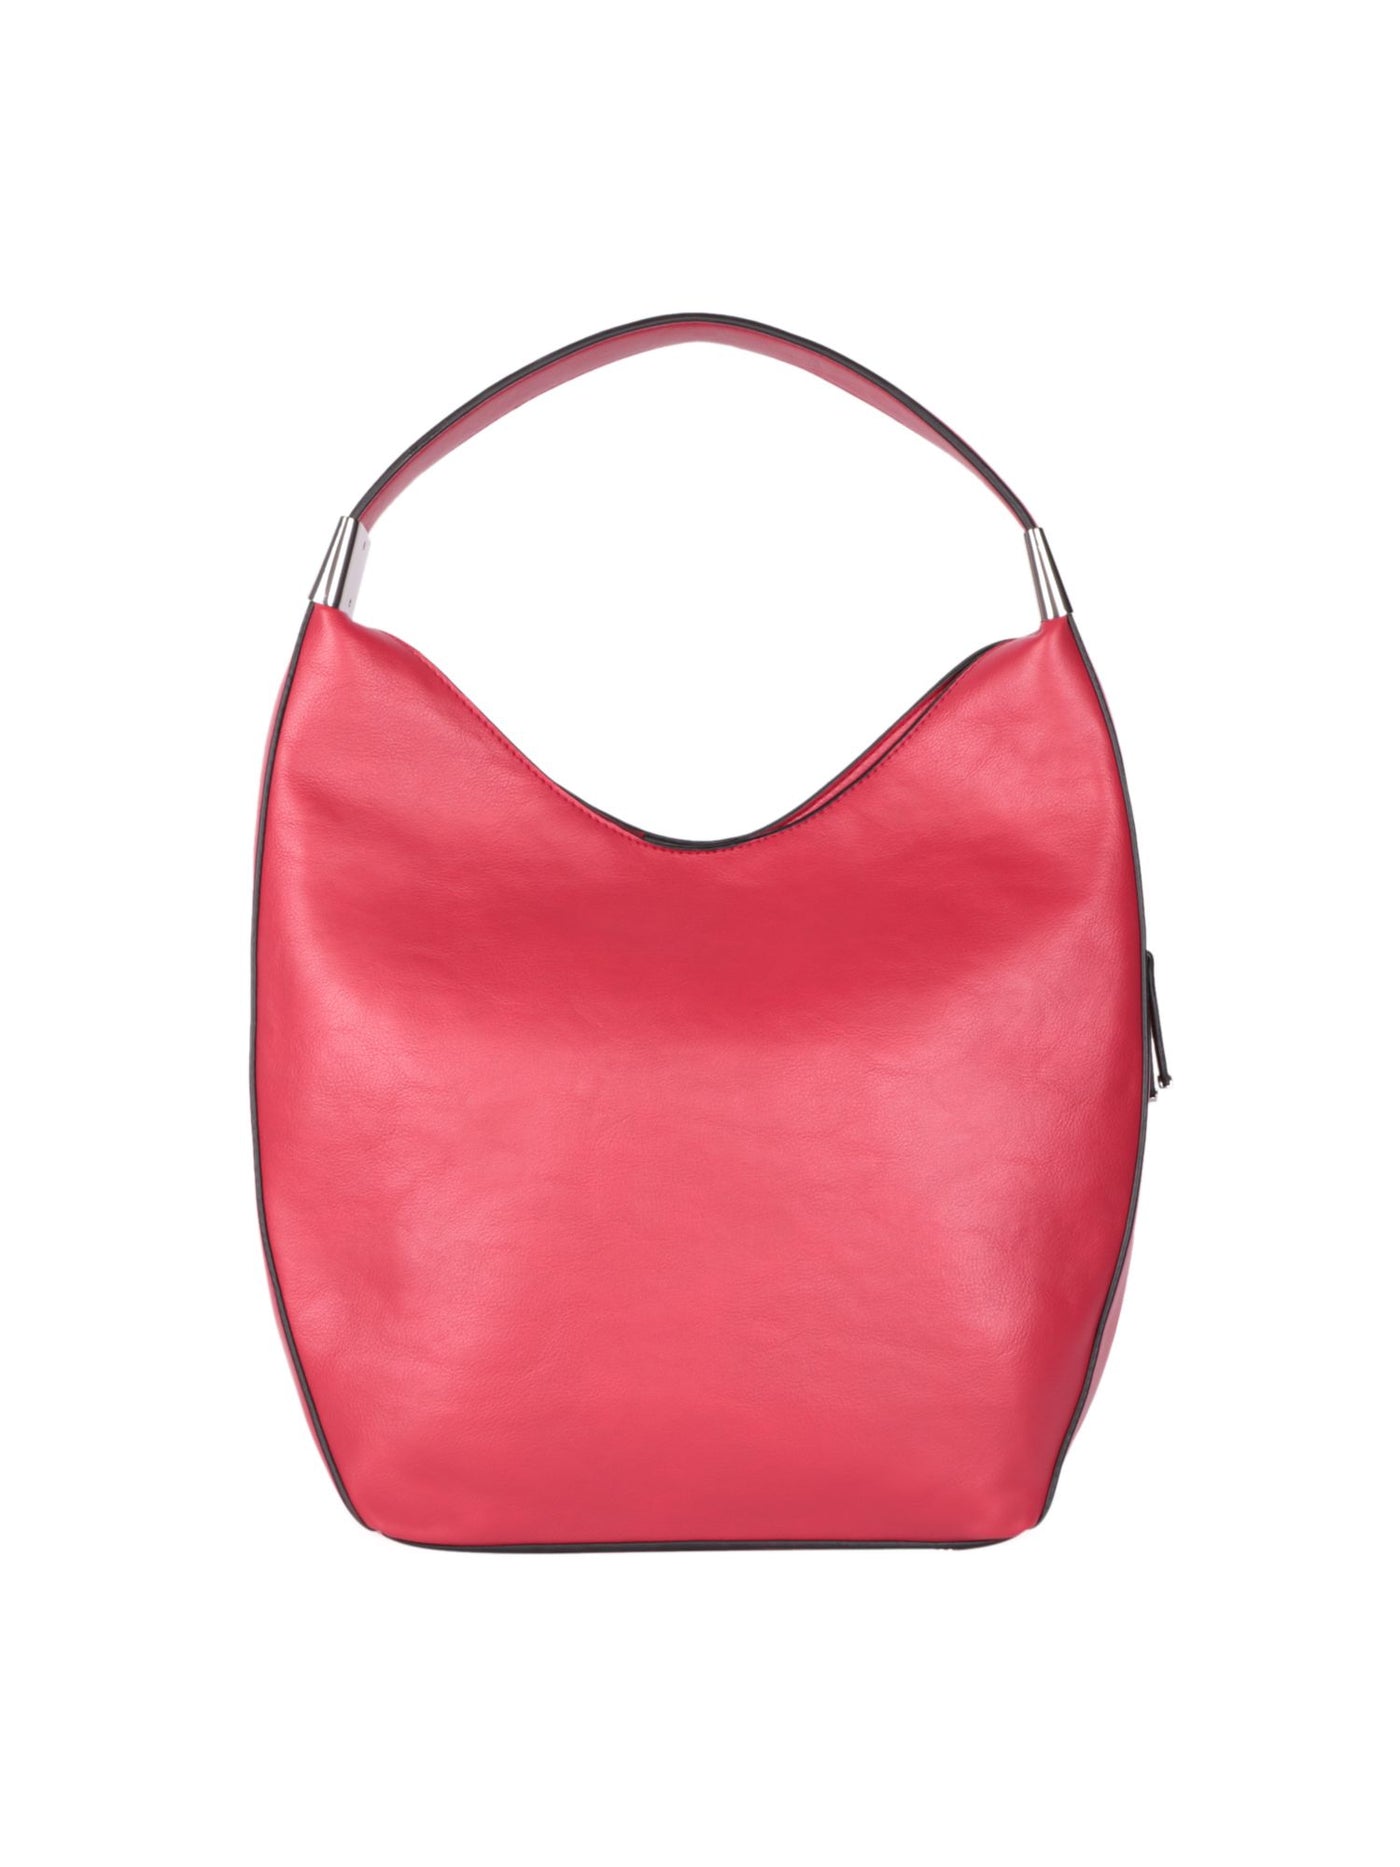 ALFANI Women's Red Bangle Feet Polyester Silver-Tone Exterior Hardware Single Strap Hobo Handbag Purse